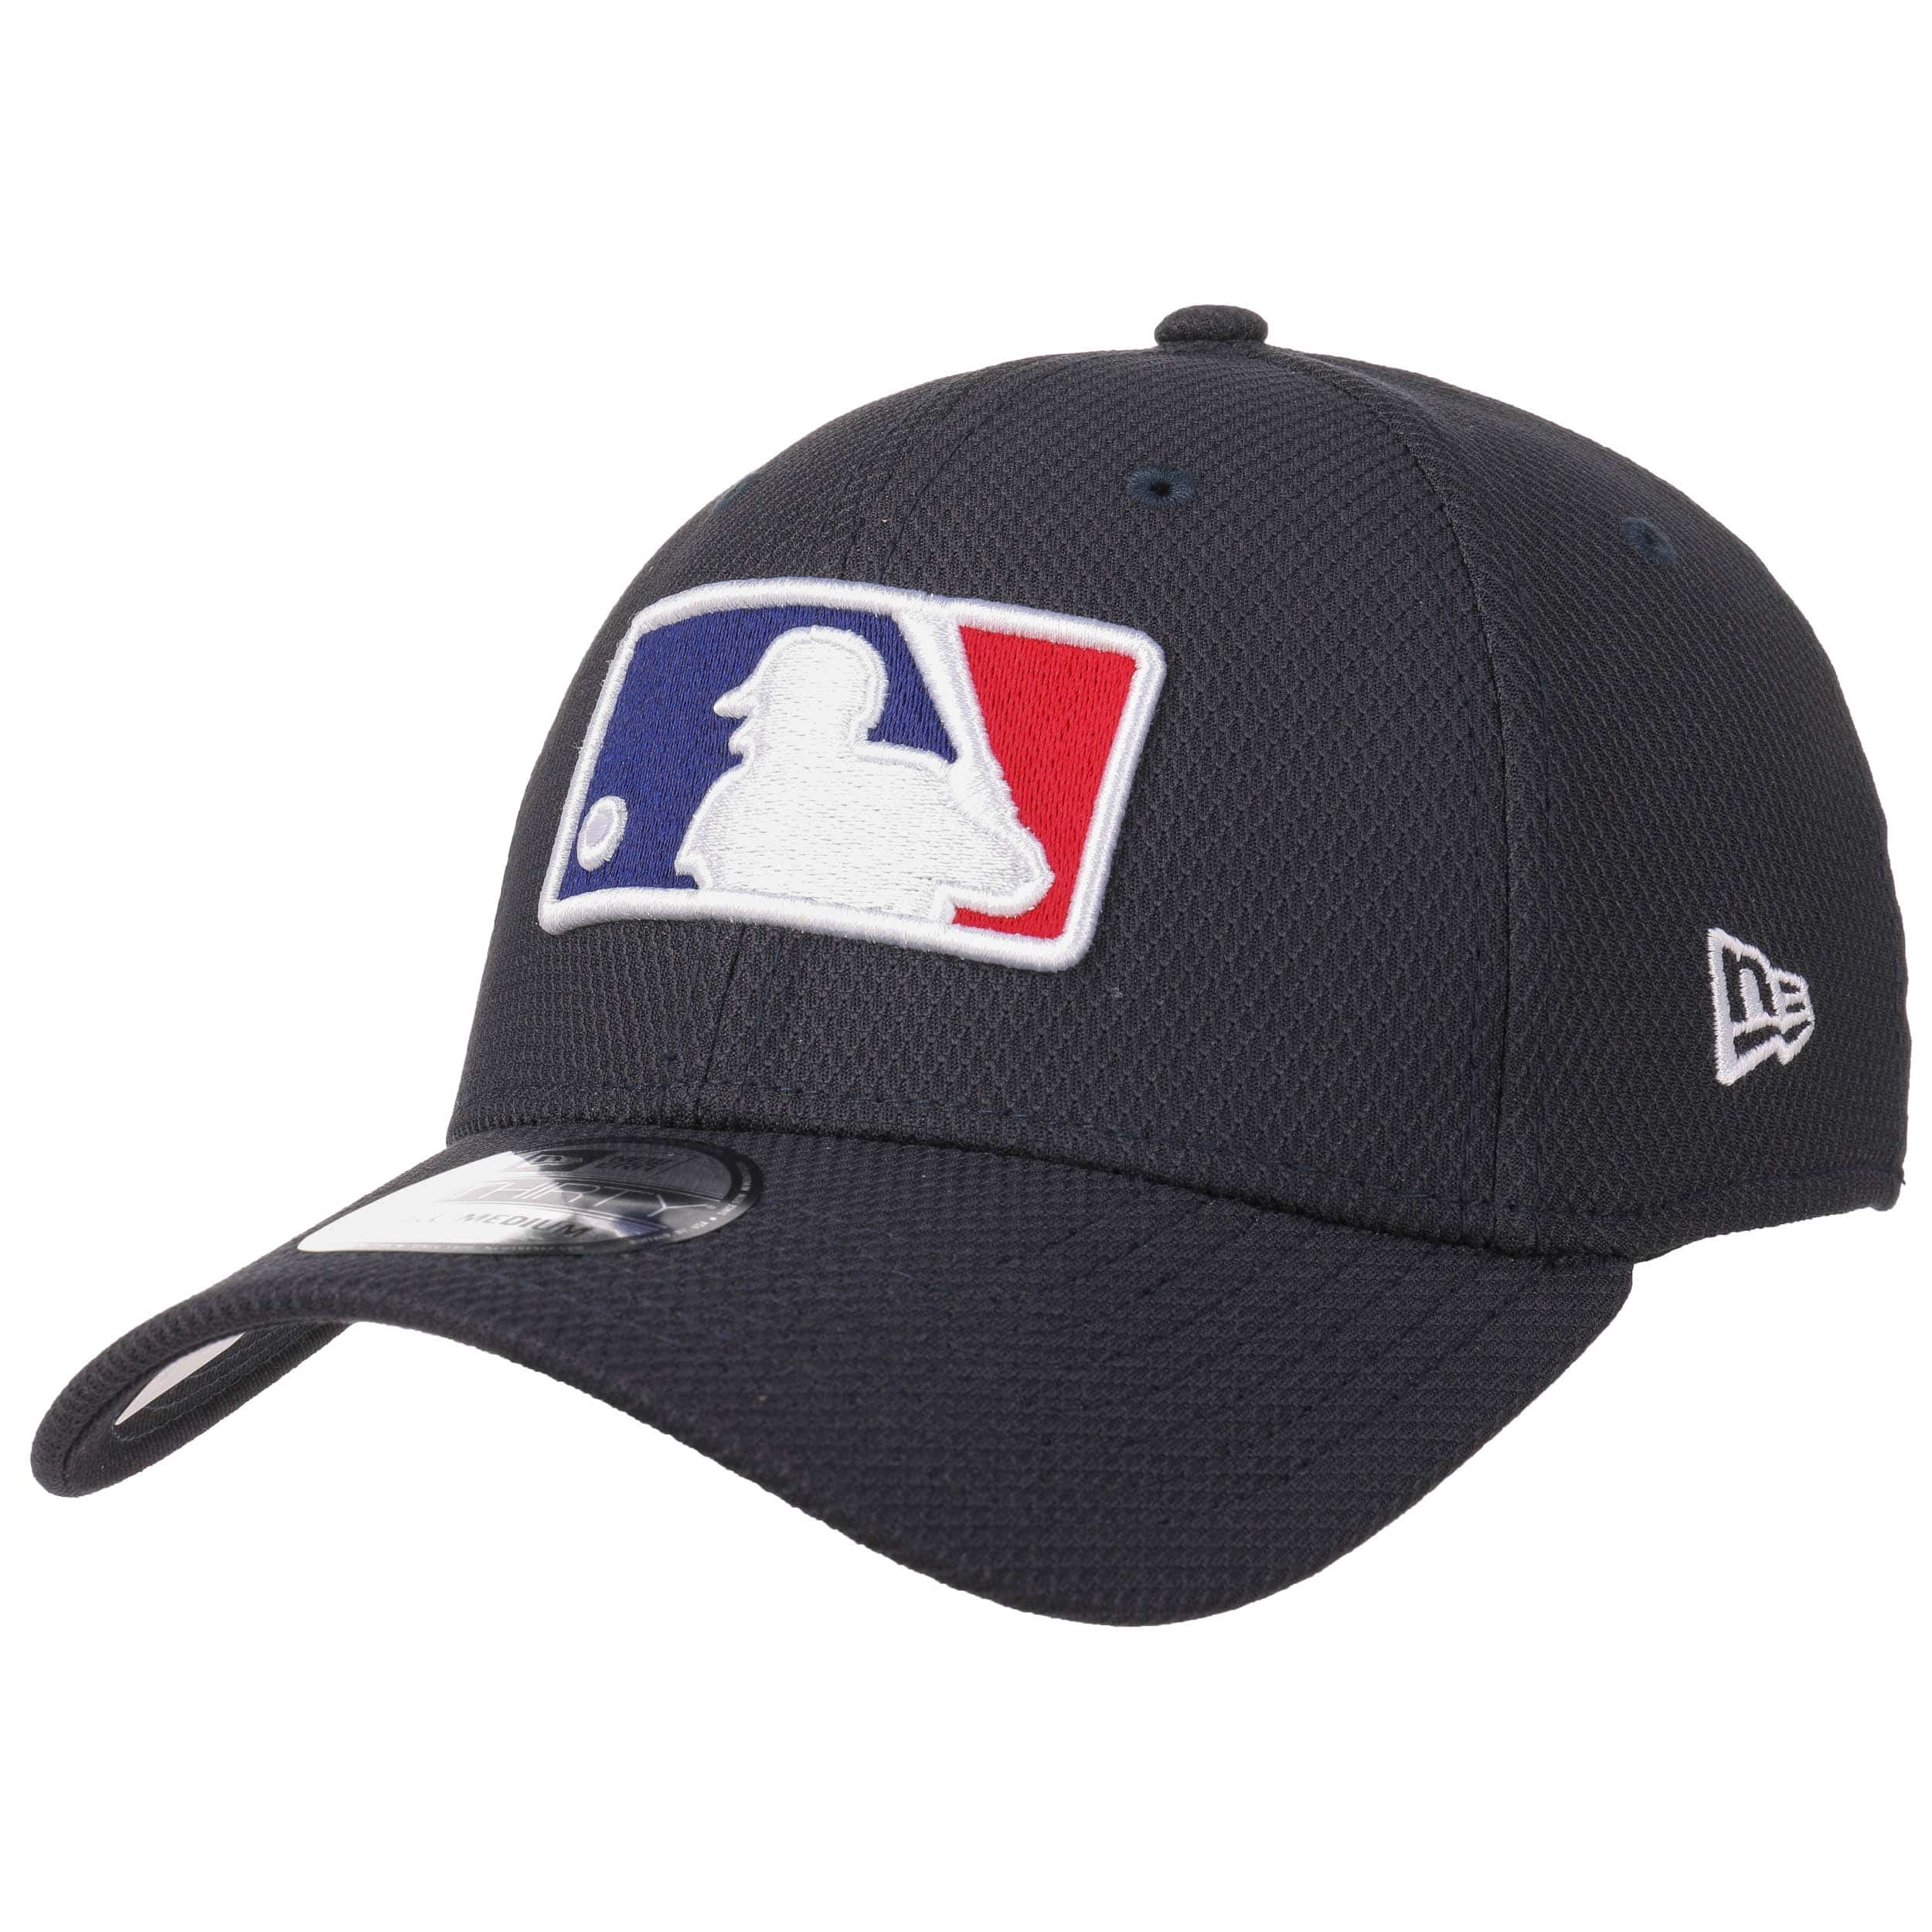 New Era Cap - The Official Cap of Major League Baseball.